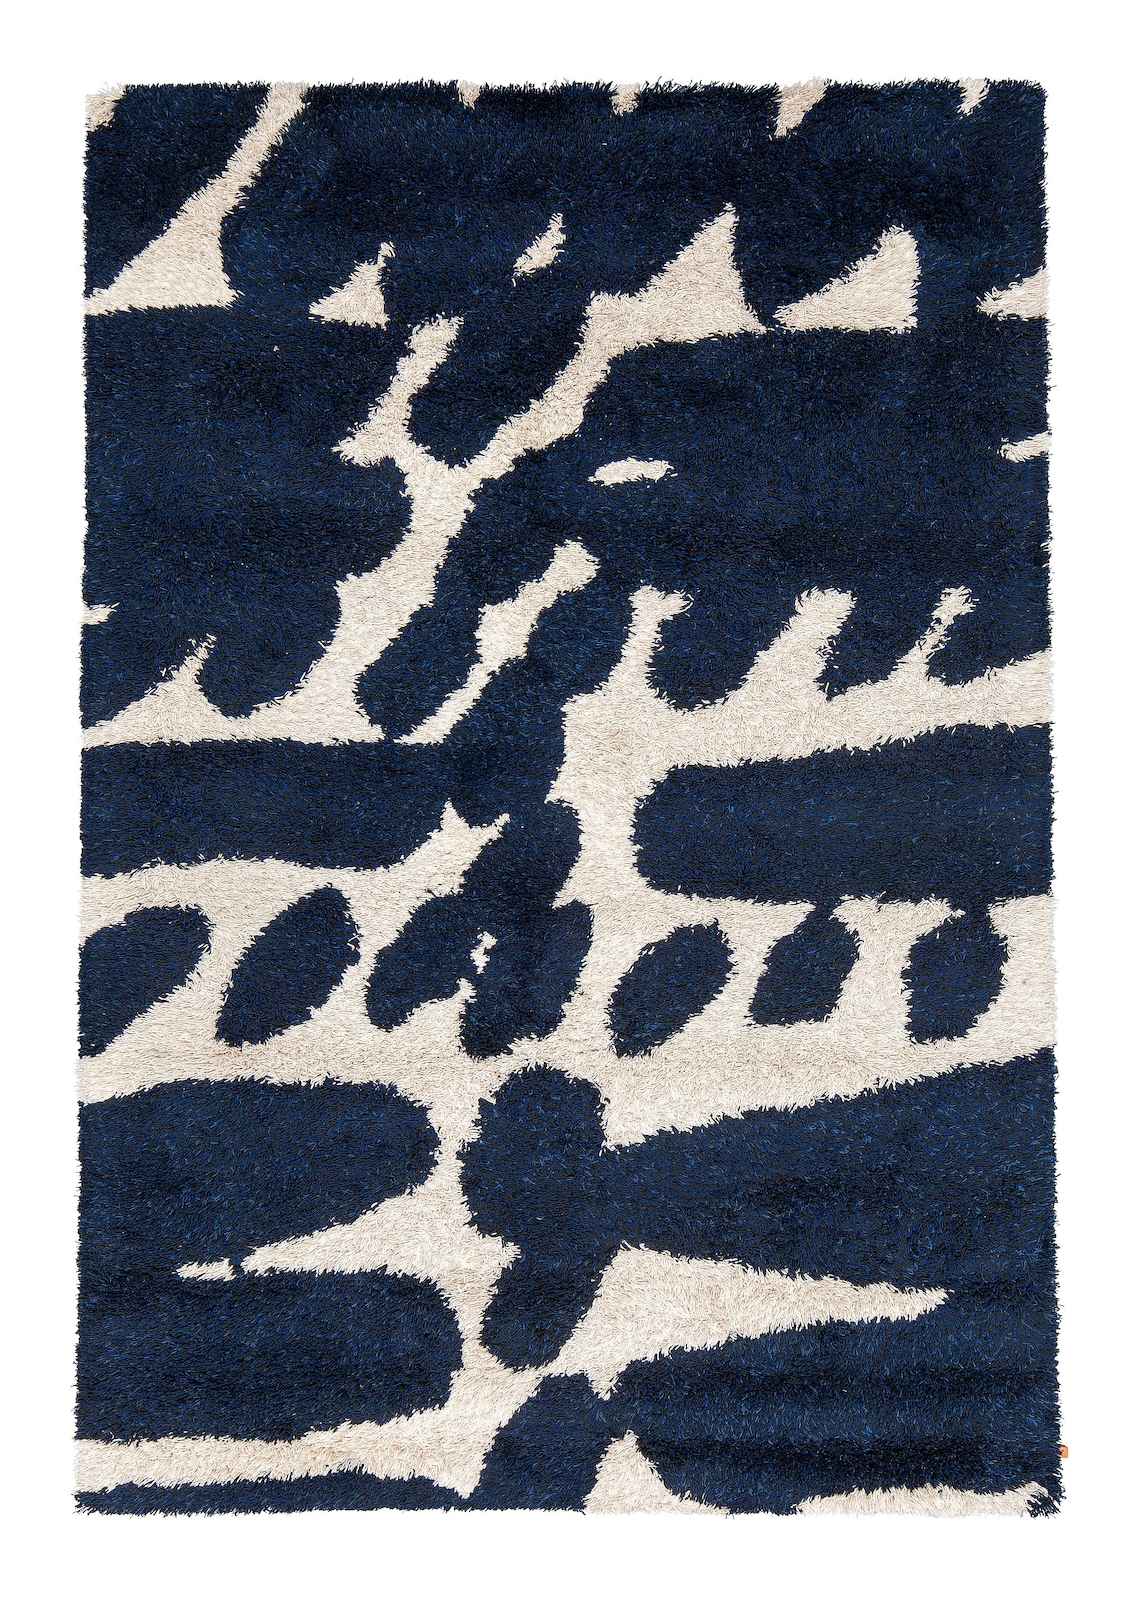 Joakim Lundqvist, A carpet, 